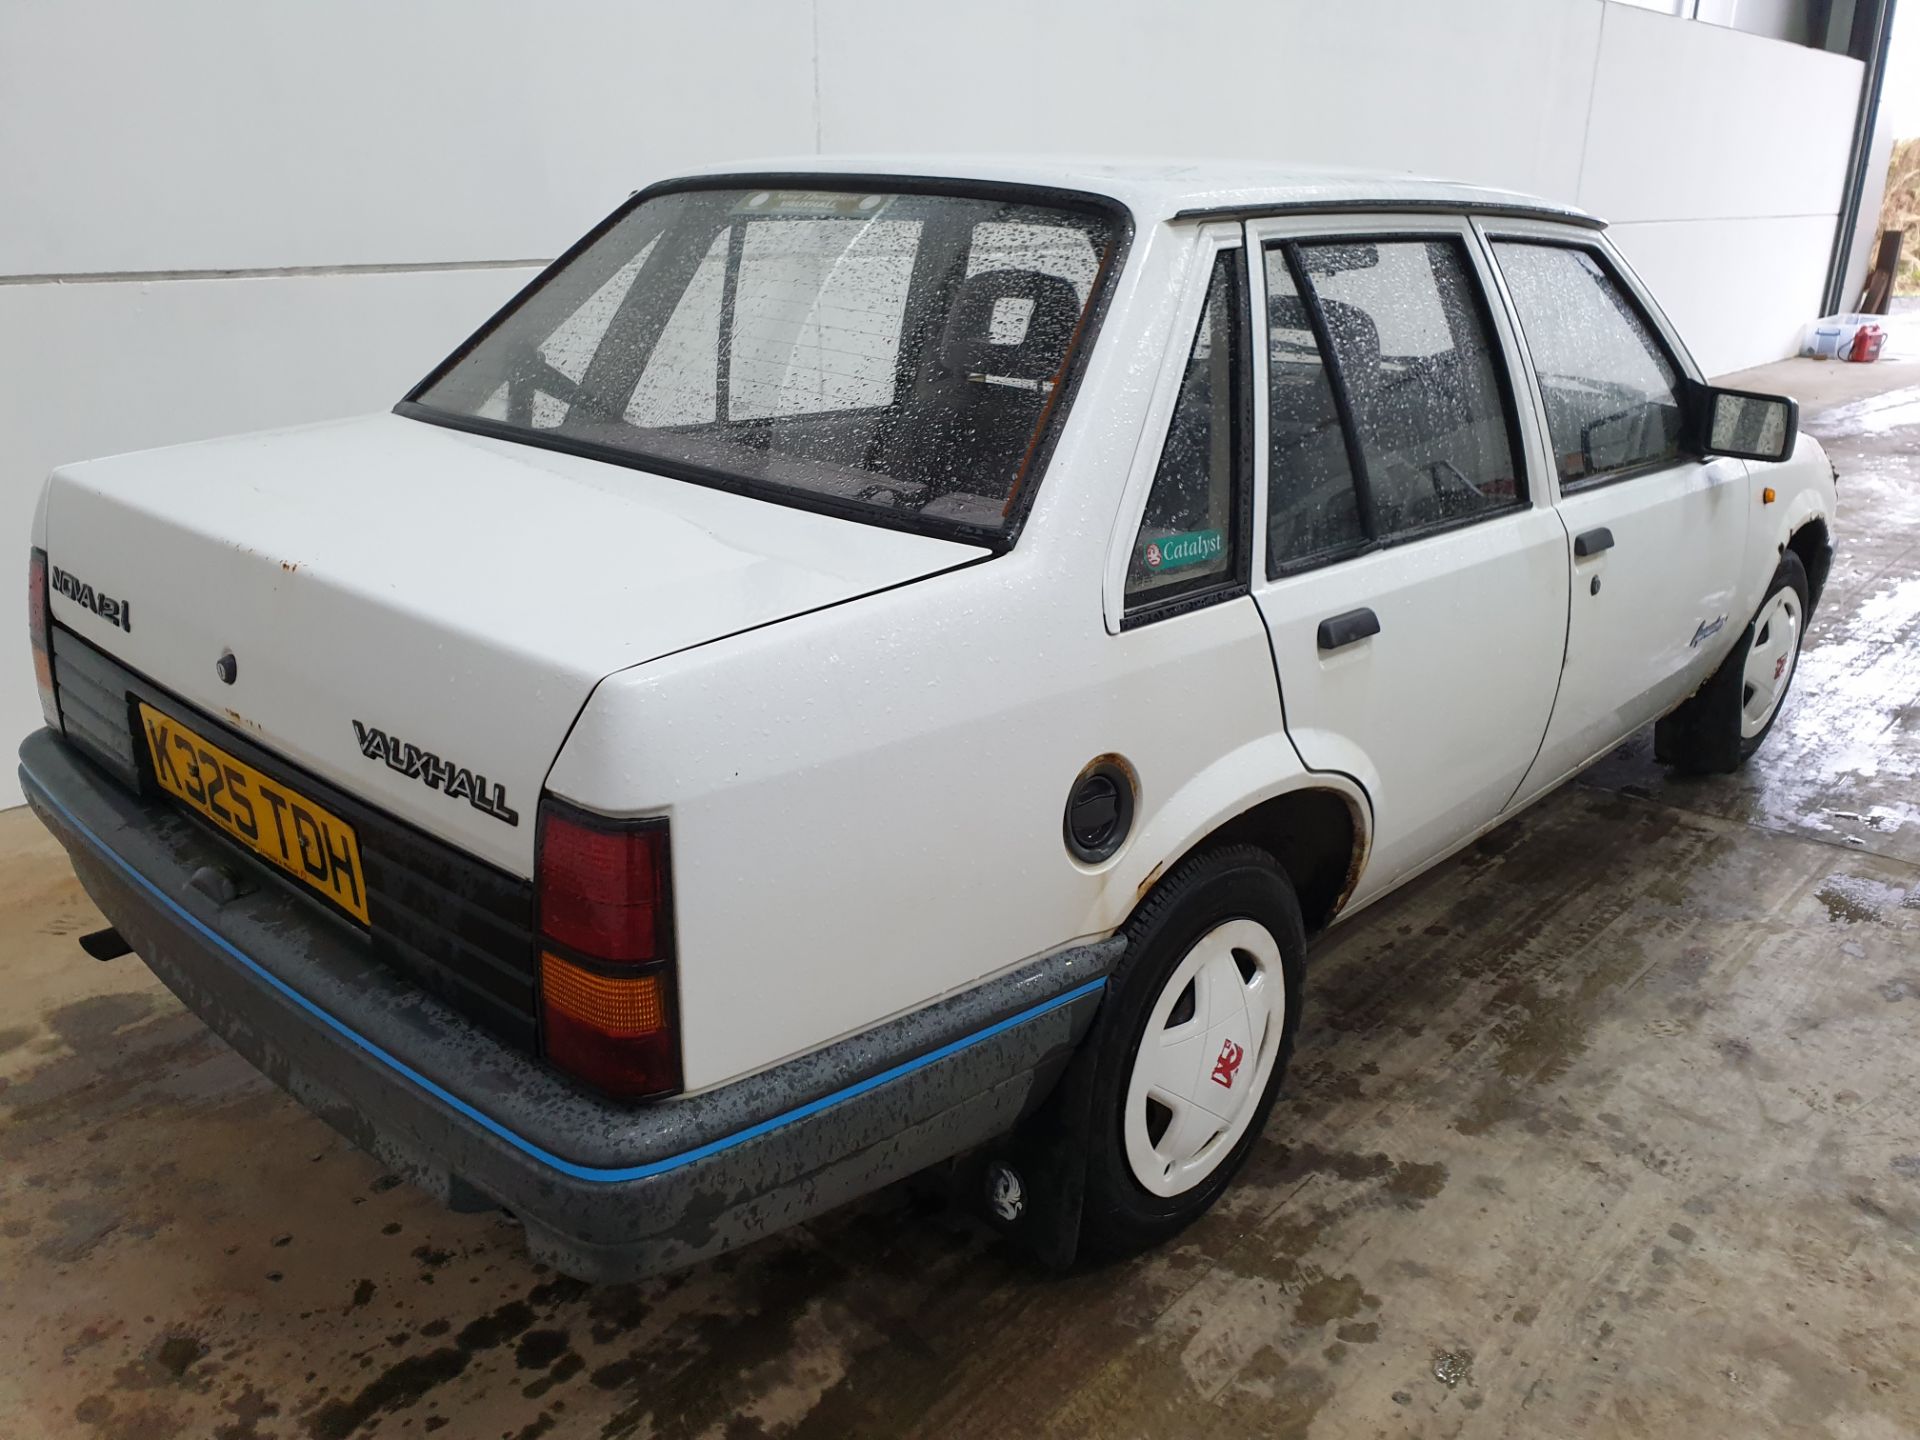 1992 Vauxhall Nova 4dr Expression - Image 3 of 12